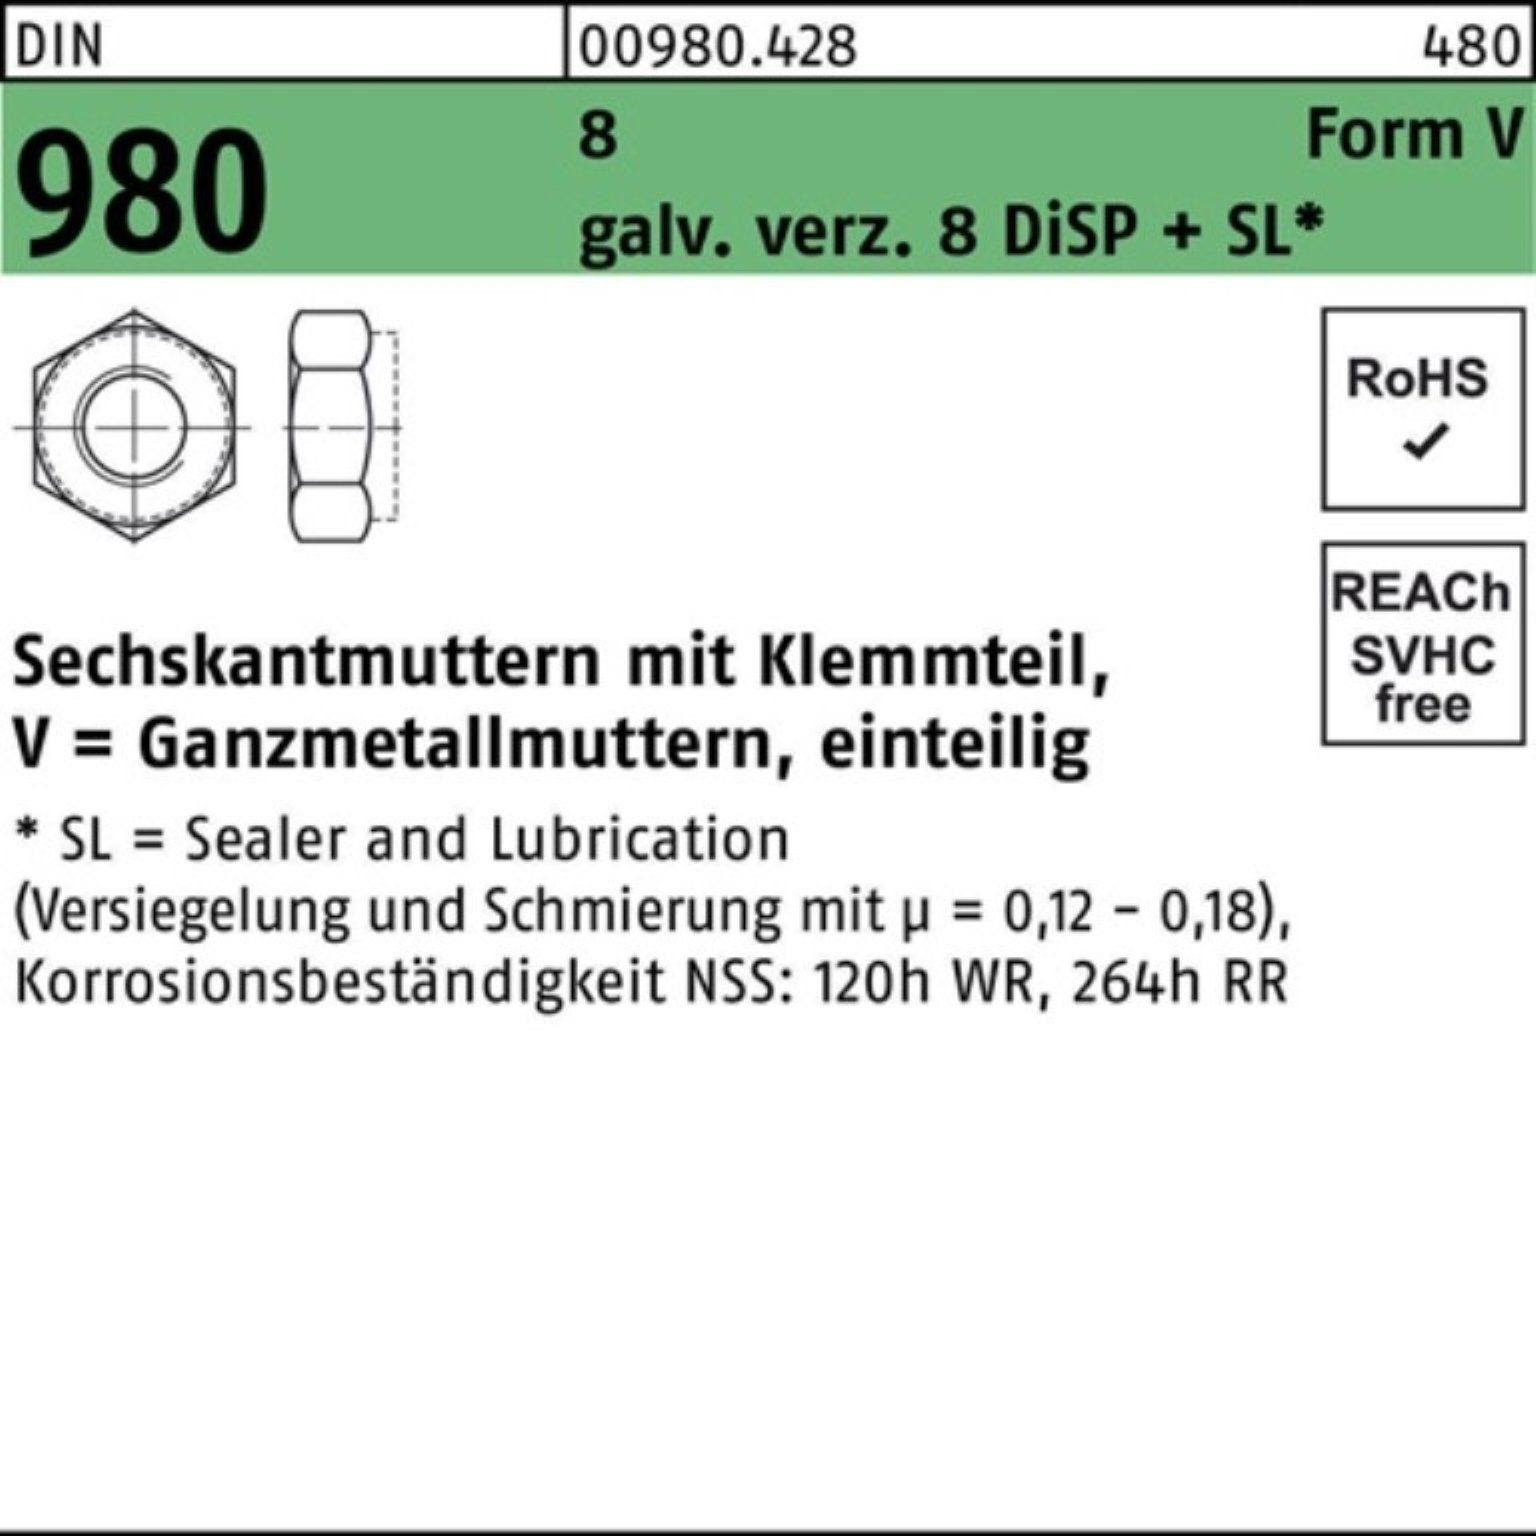 Reyher Sechskantmutter Klemmteil 980 8 M16 DISP V 100er Sechskantmutter DIN Pack galv.verz. 8